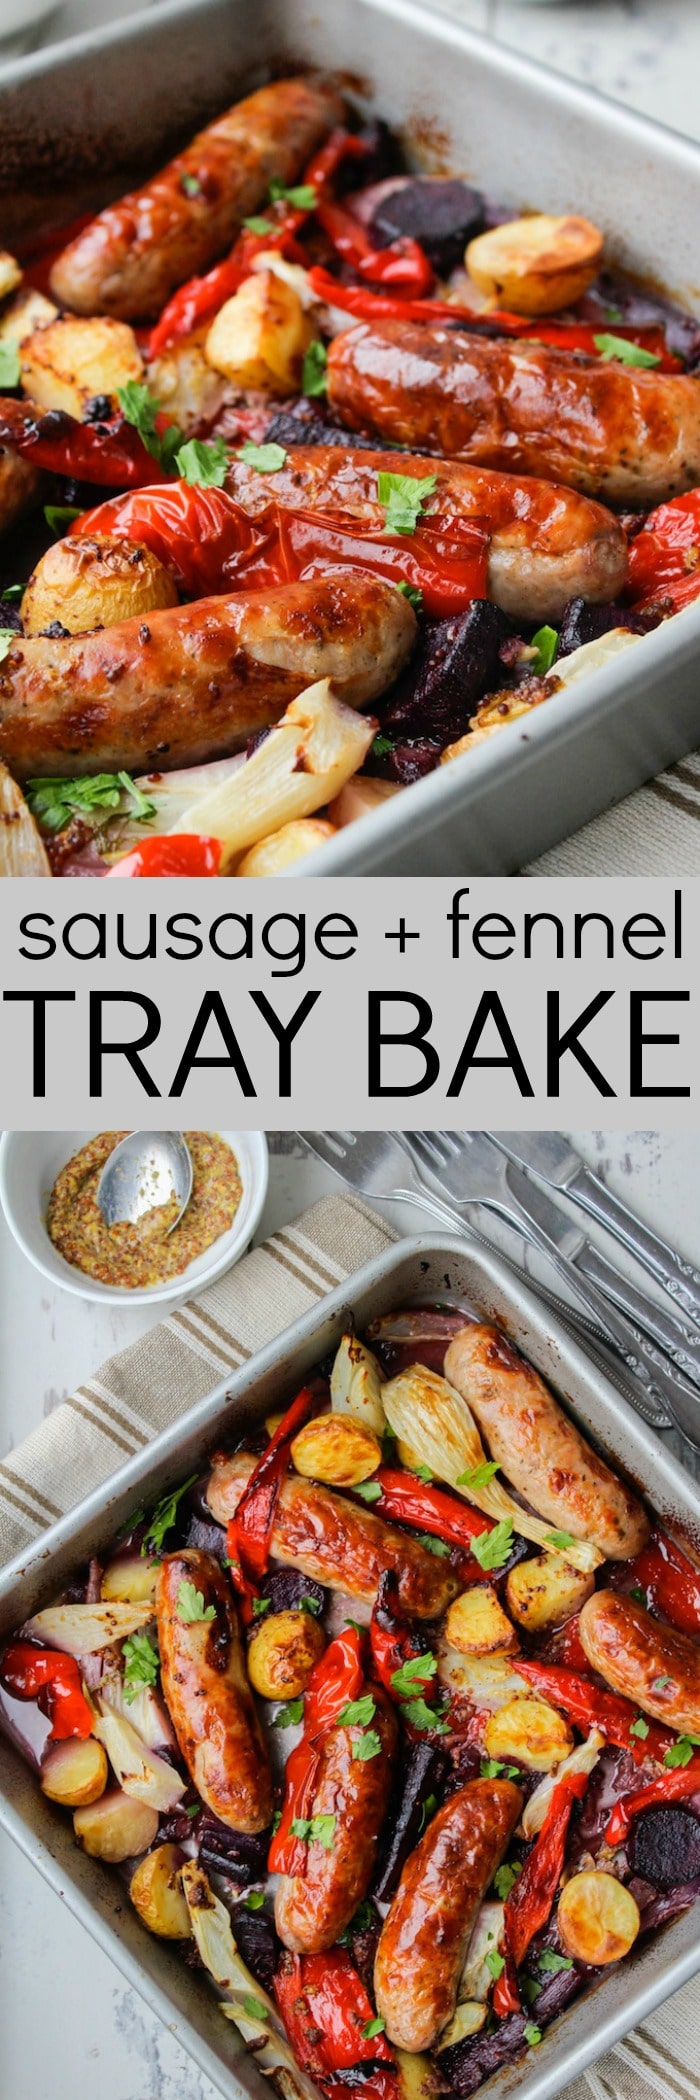 Easy Roast Dinner of Sausage + Fennel Tray Bake @asaucykitchen